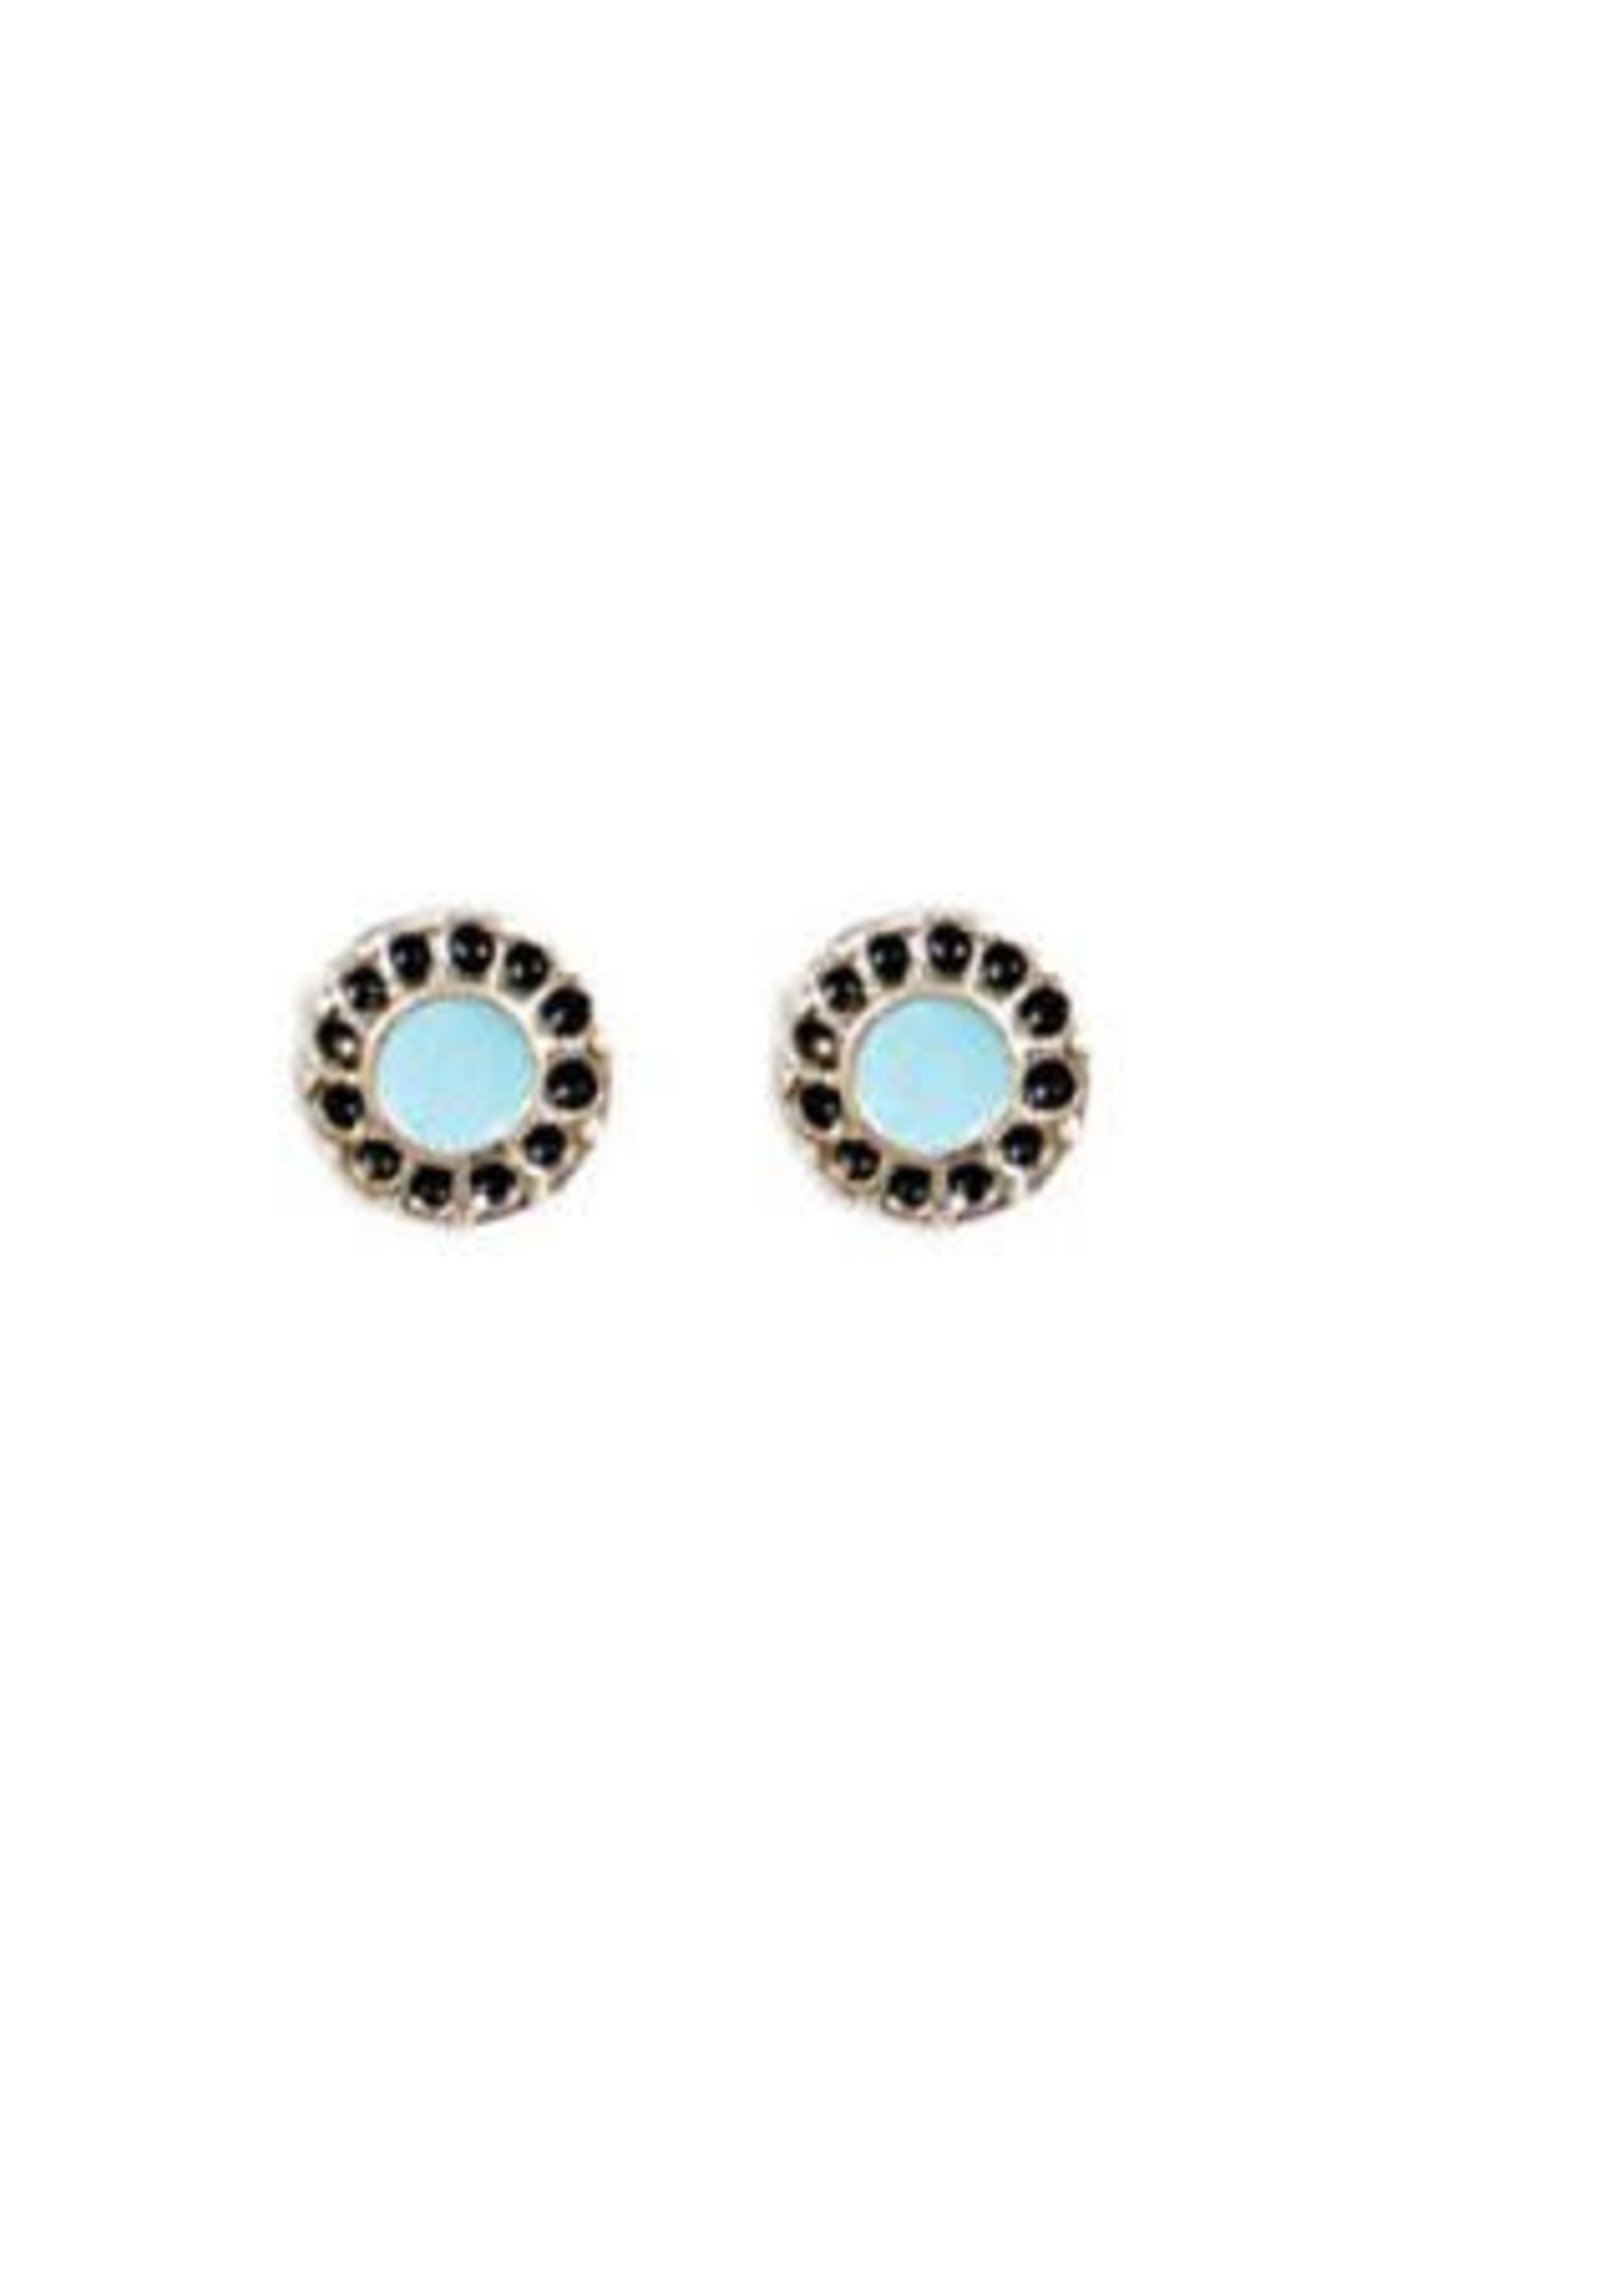 Bliing circle w/ blue earrings